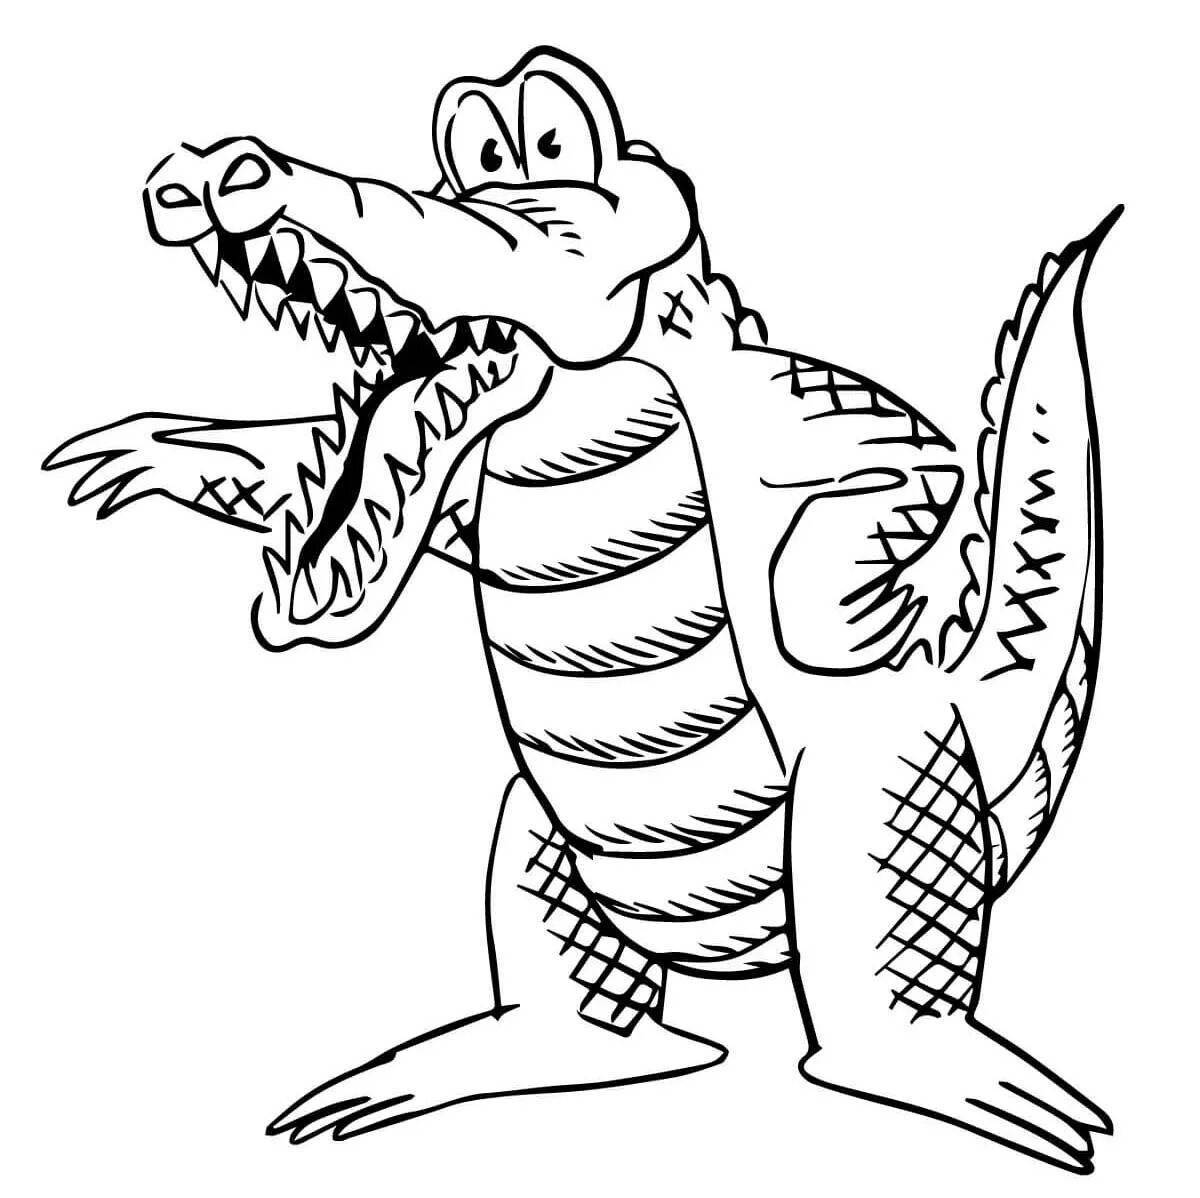 Monty crocodile coloring book